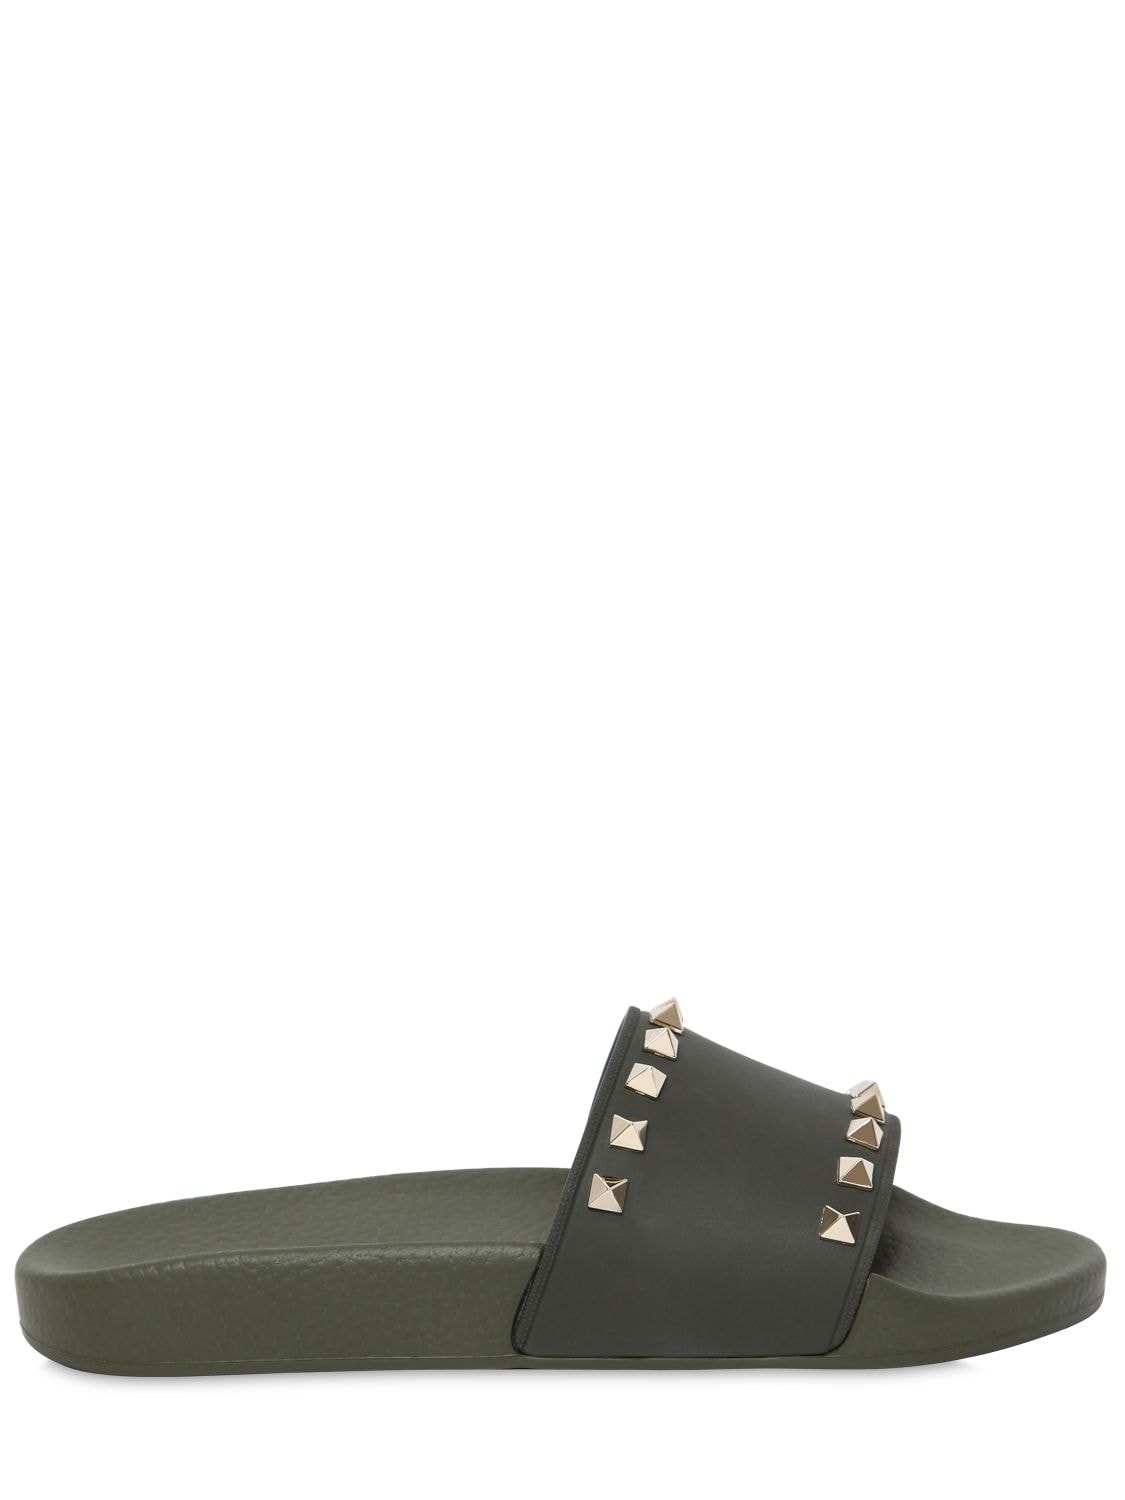 Valentino Garavani Rockstud Embellished Pvc Slide Sandals In Military Green